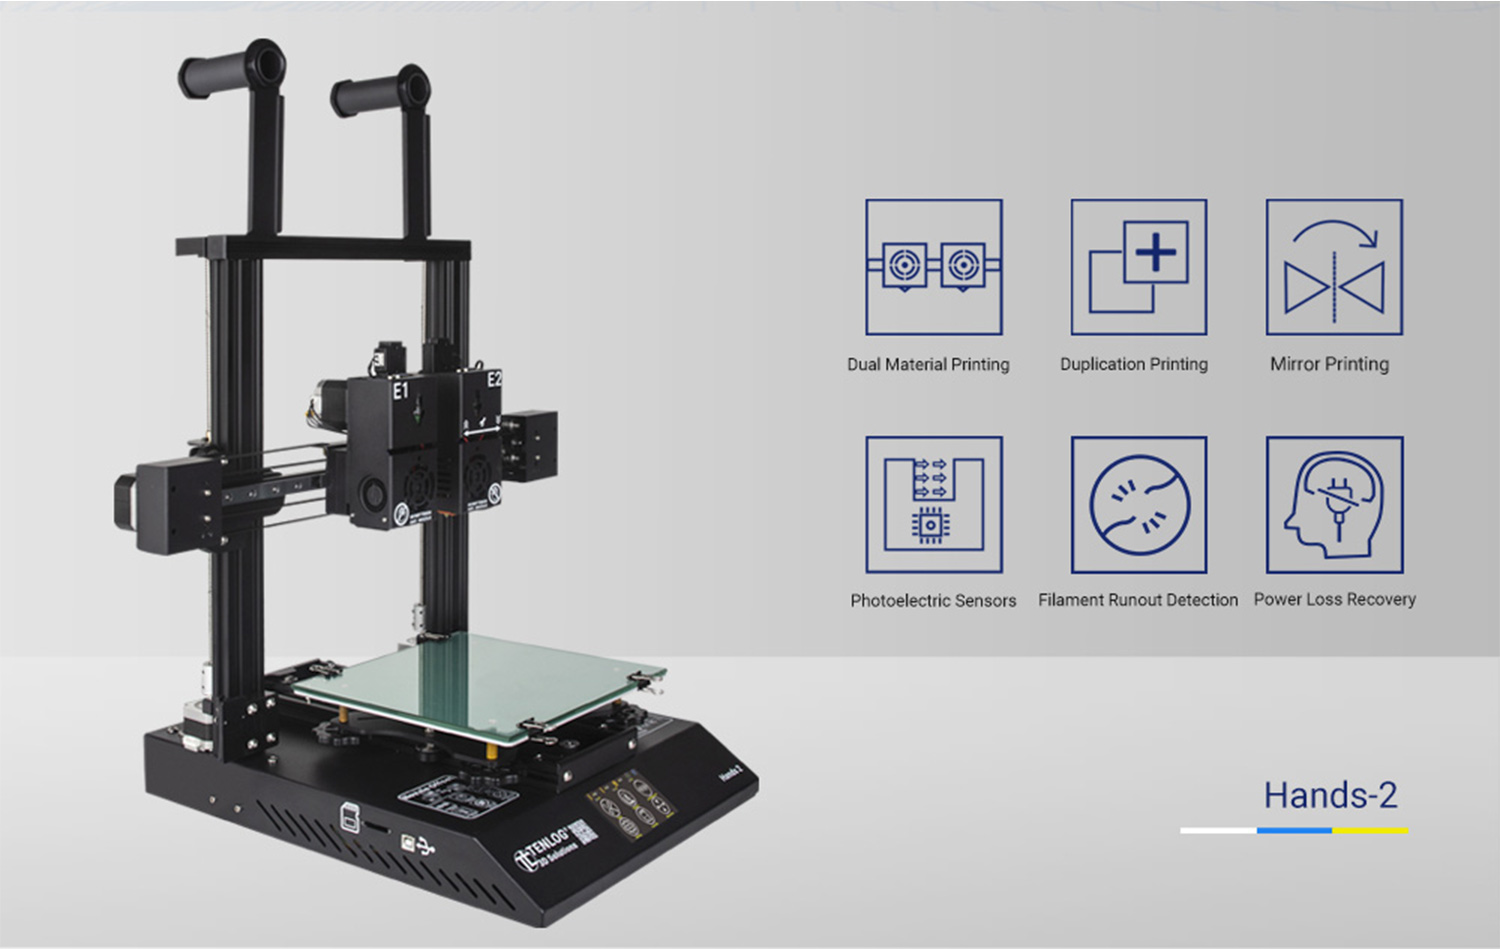 TENLOG Hands 2 DMP 3D Printer Function